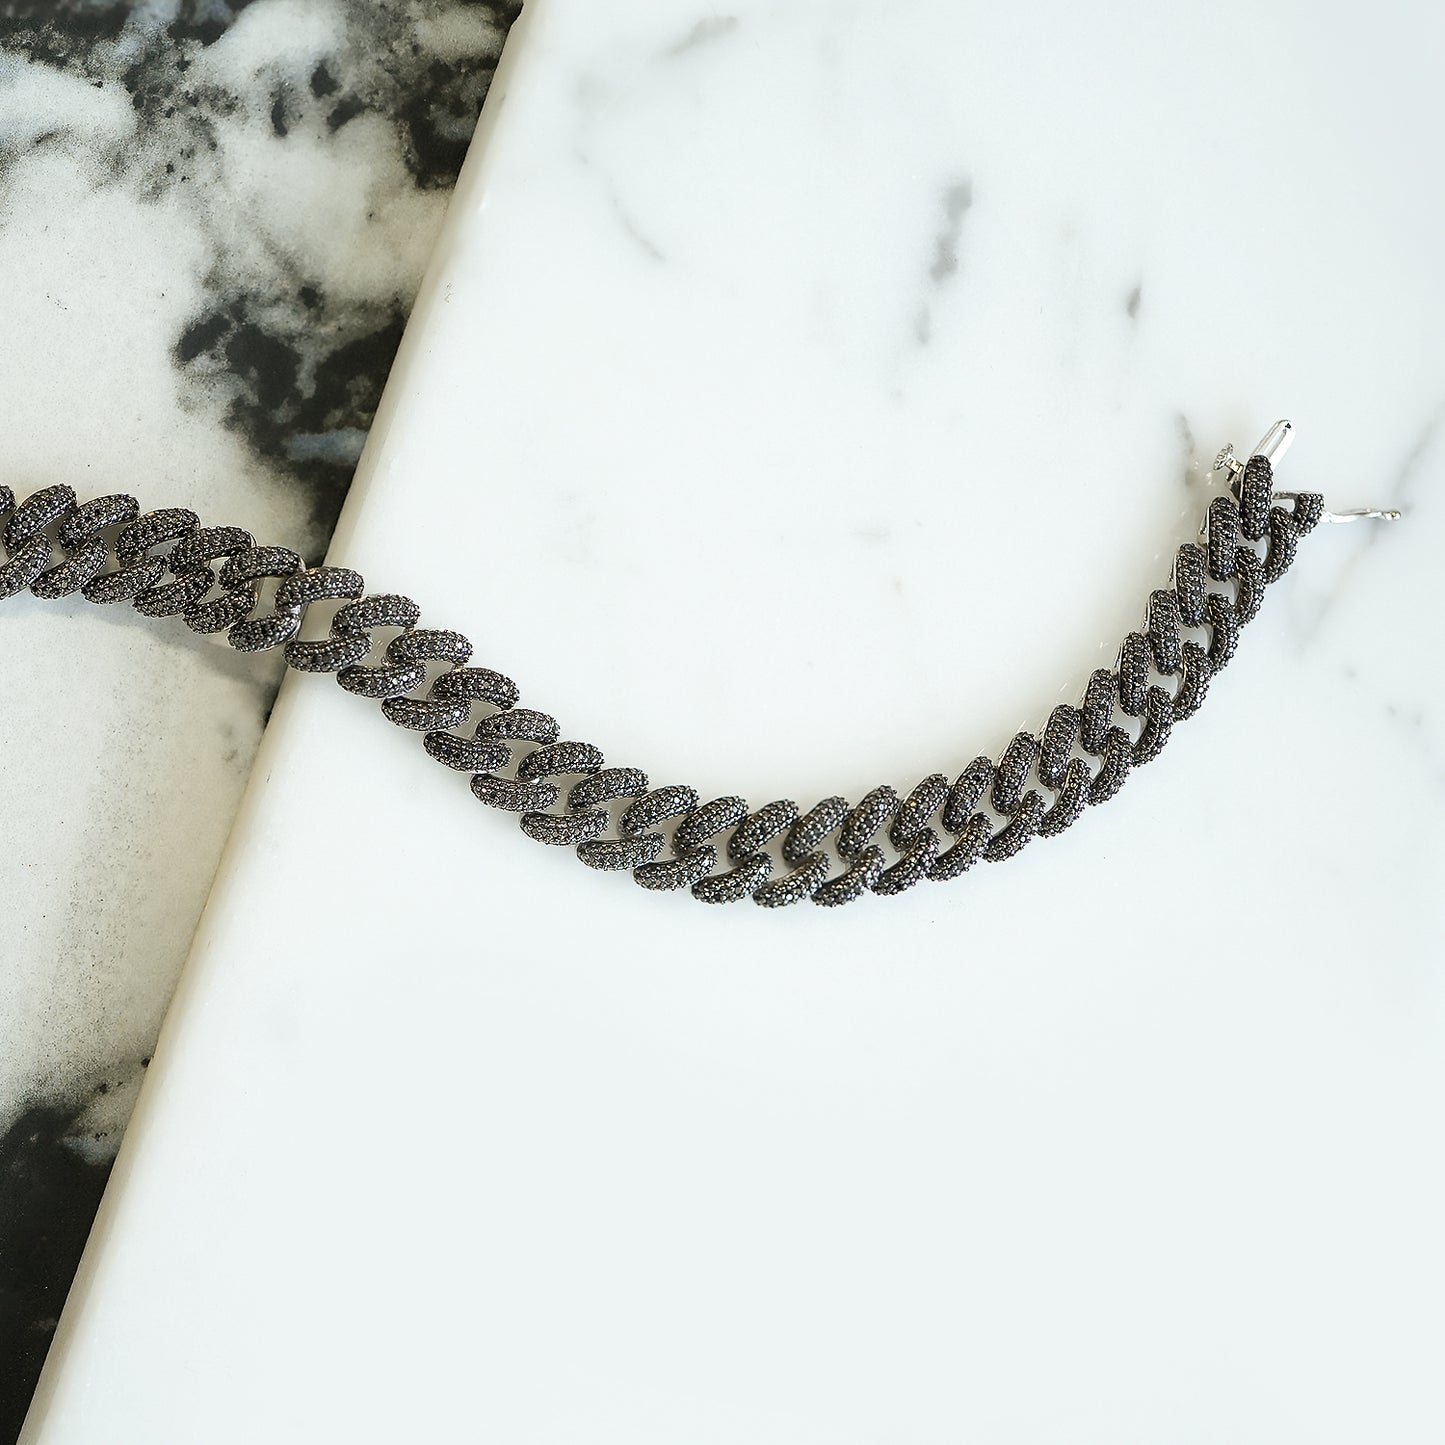 Black Diamond Curb Bracelet Placed on the Table